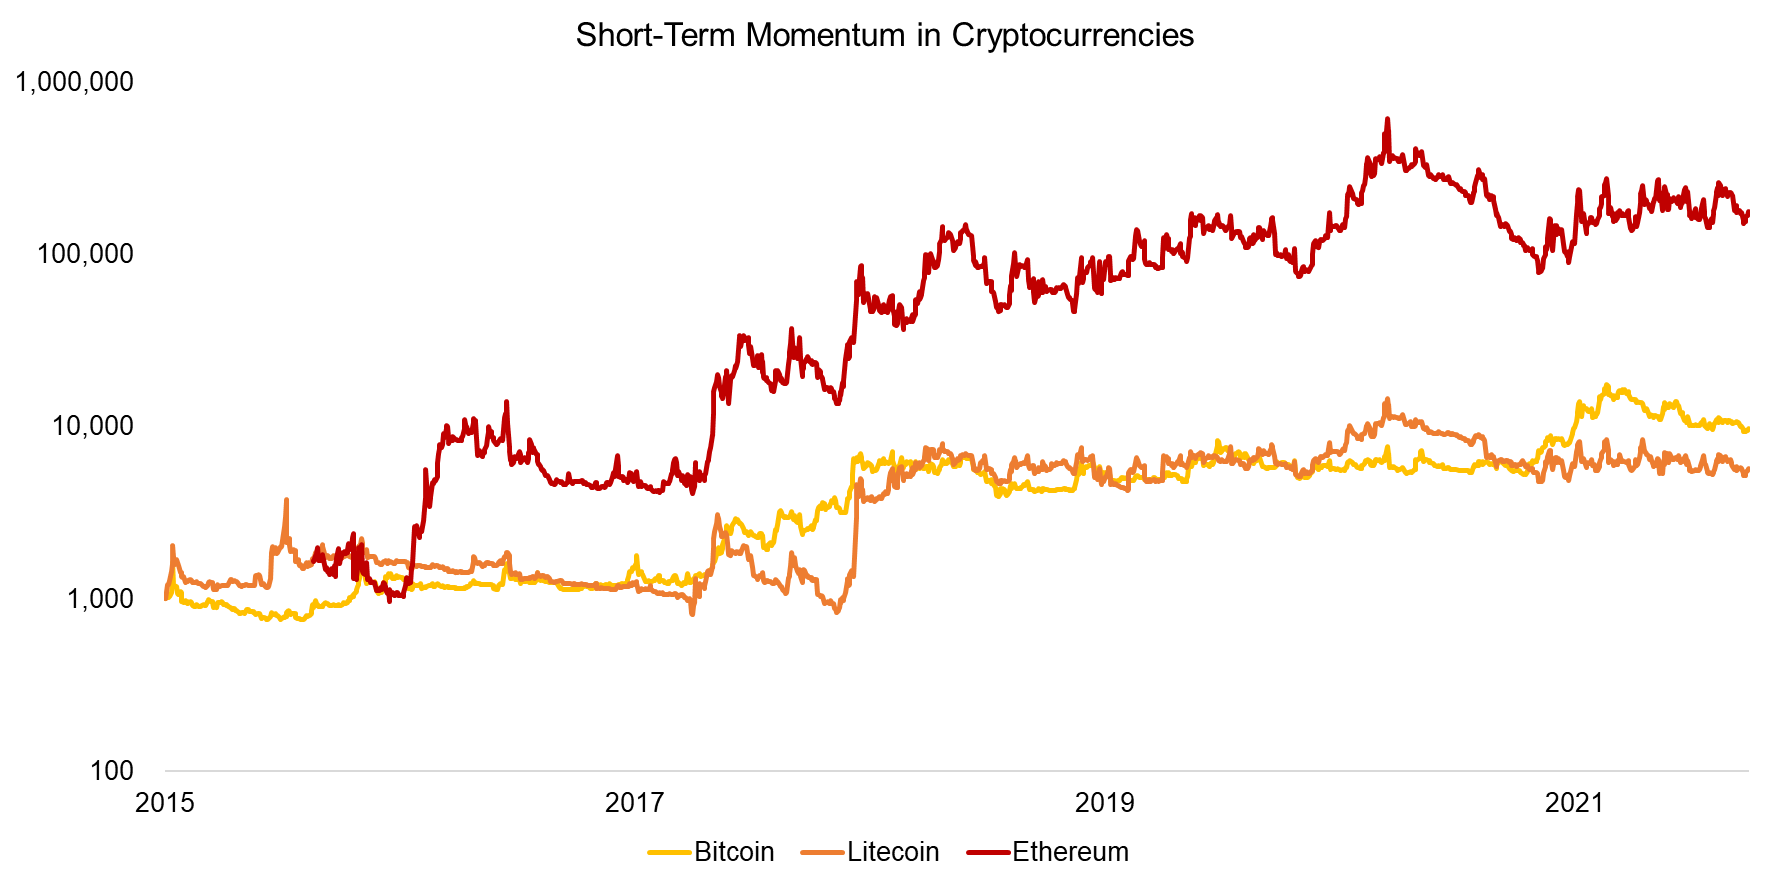 Short-Term Momentum in Cryptocurrencies